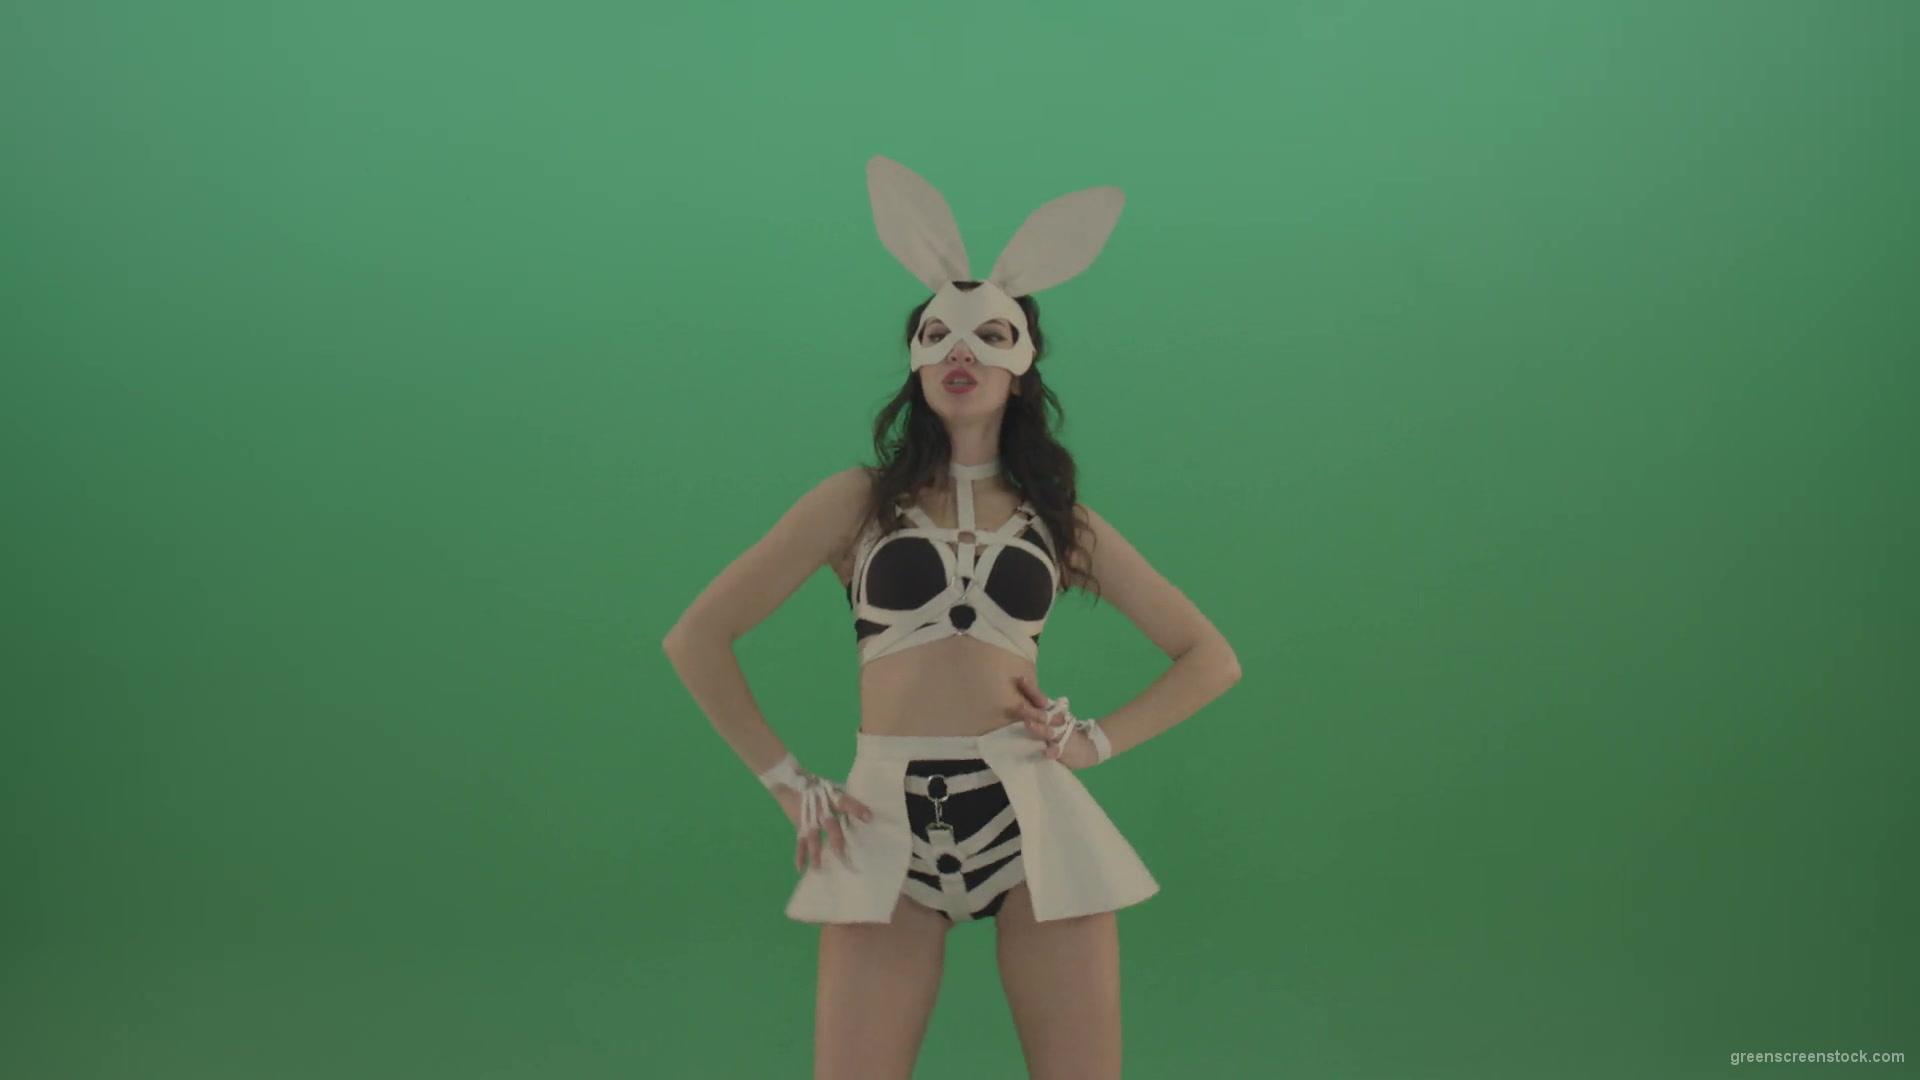 White-Rabbit-Girl-sexy-posing-dancing-in-bunny-style-over-Green-Screen-1920_006 Green Screen Stock